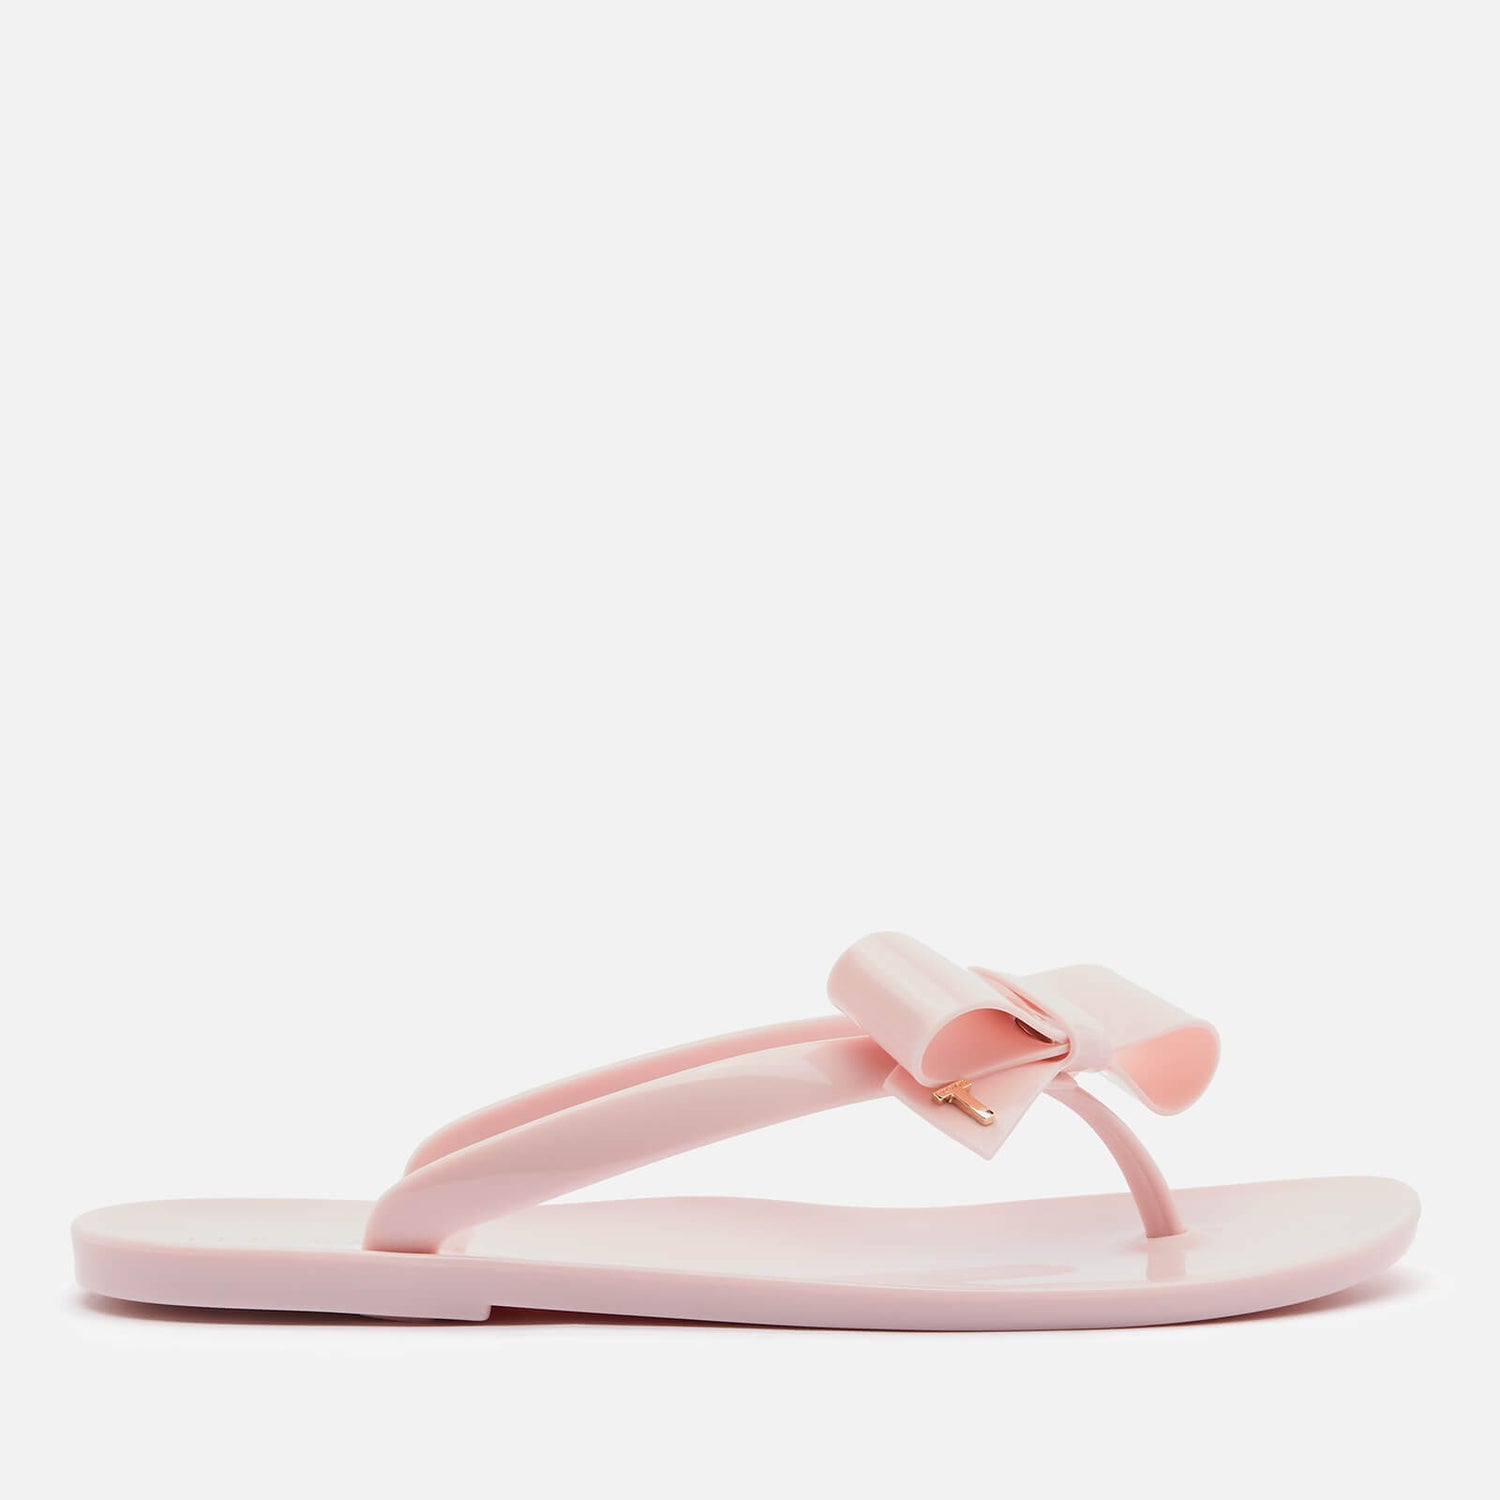 Ted Baker Women's Bejouw Flip Flops - Light Pink